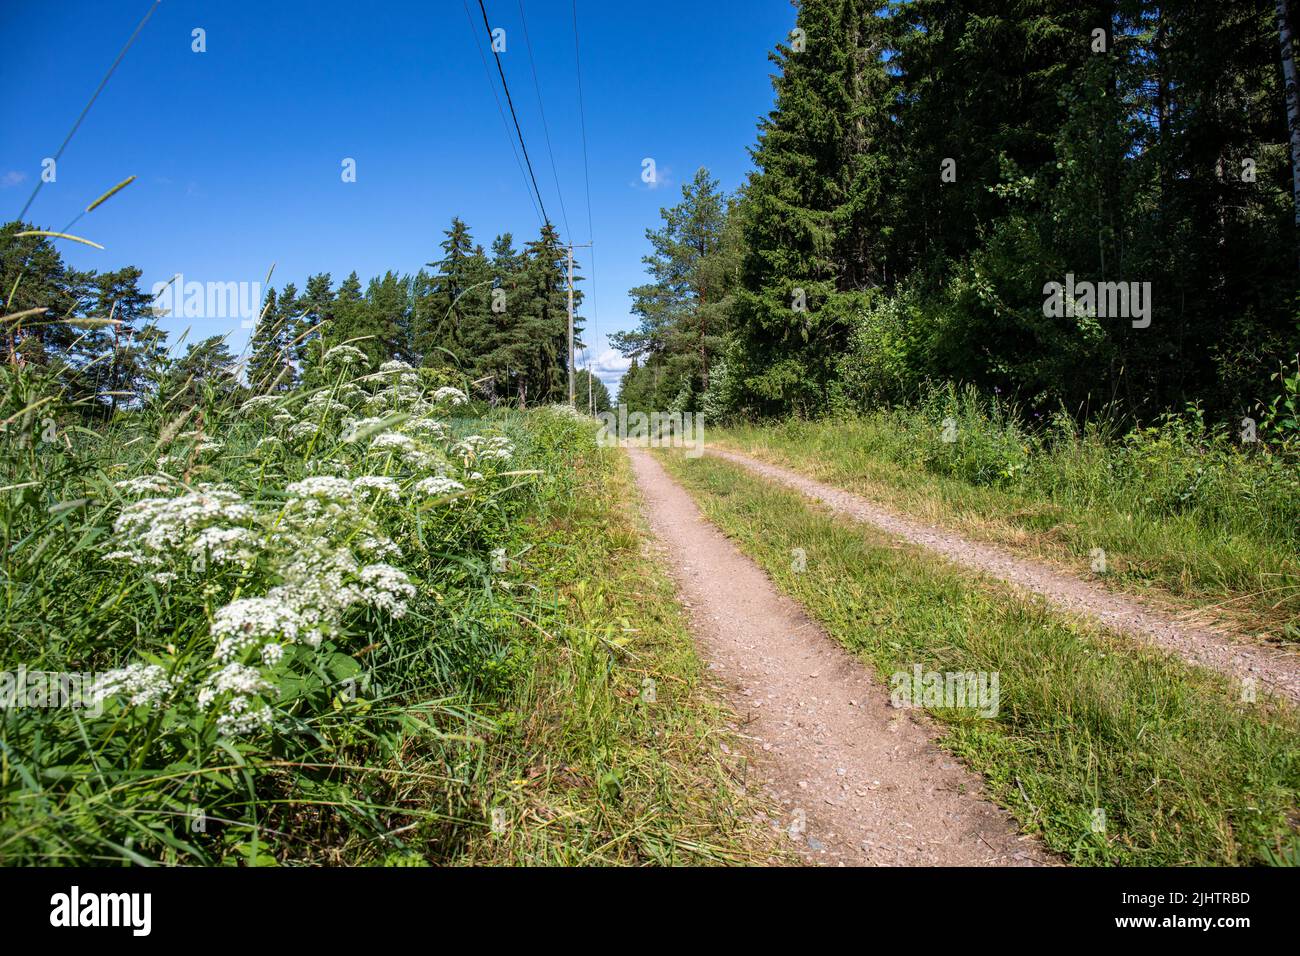 Rural dirt road in Orivesi, Finland Stock Photo